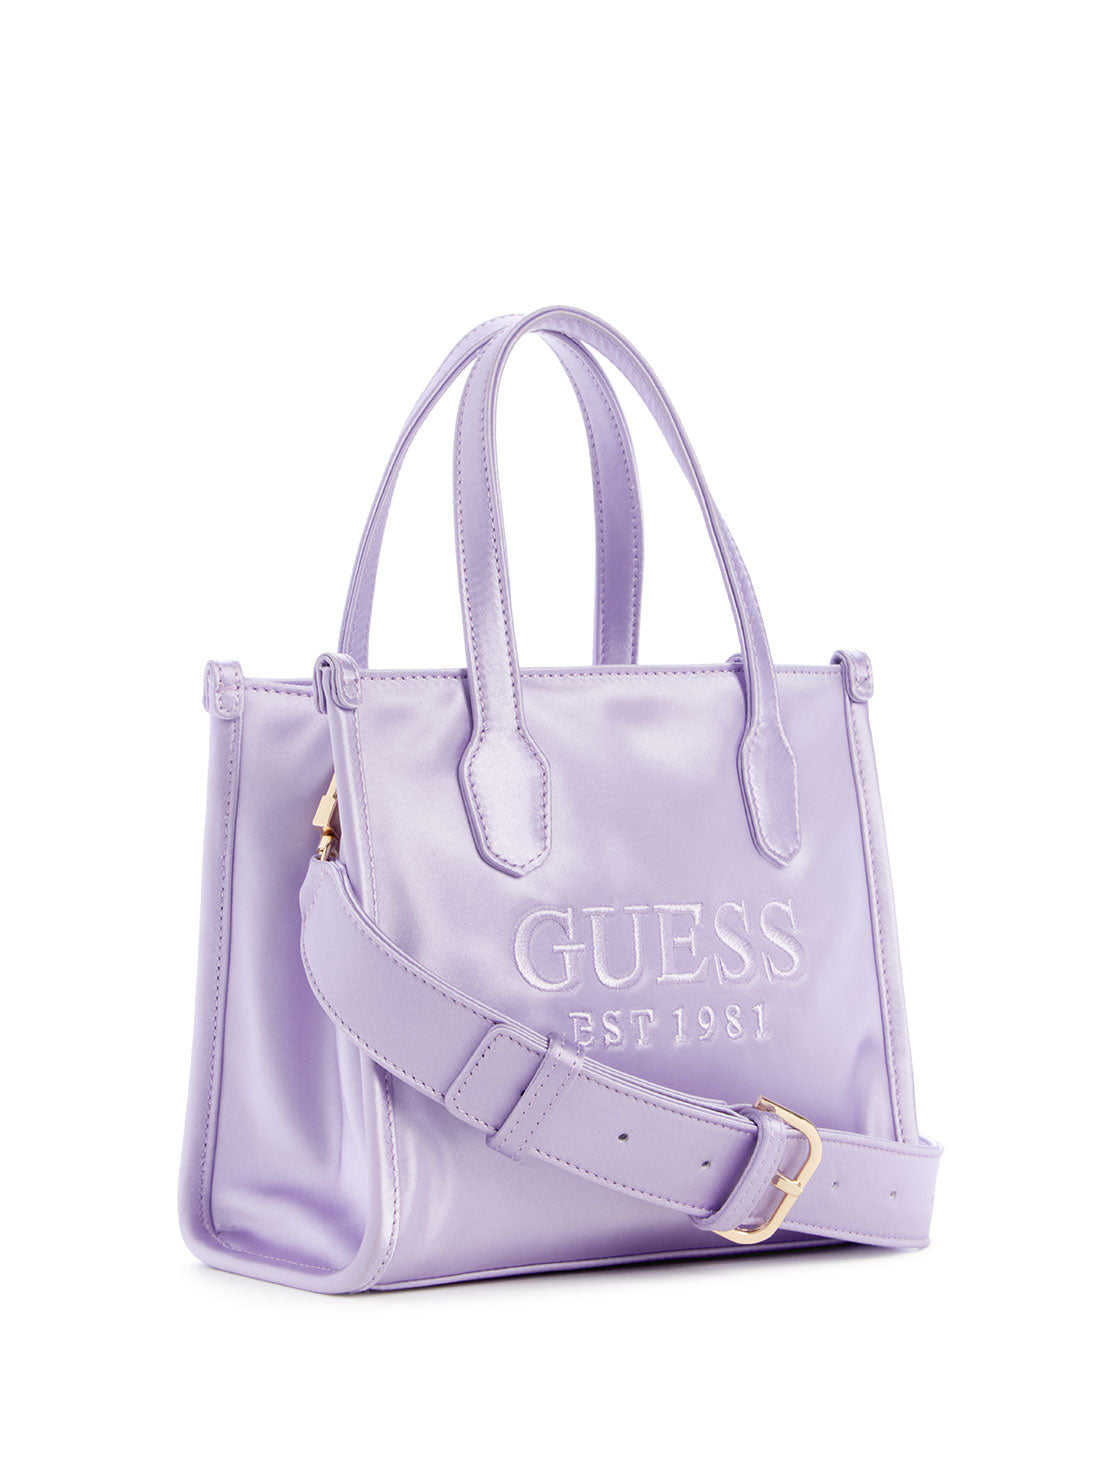 GUESS Purple Silvana Mini Tote Bag side view